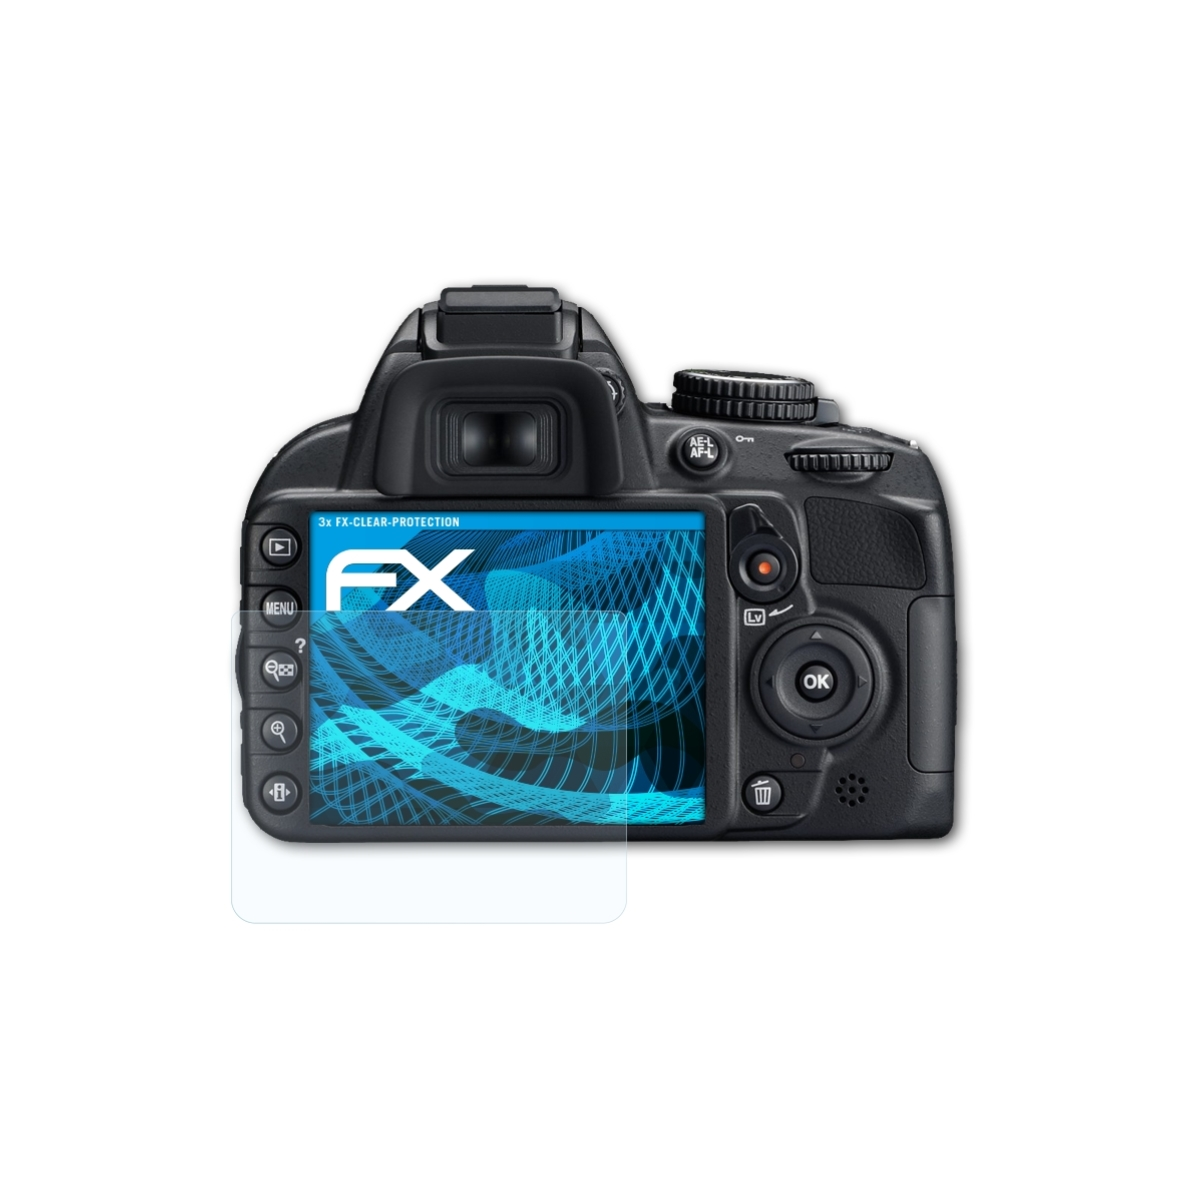 Displayschutz(für 3x Nikon ATFOLIX D3100) FX-Clear